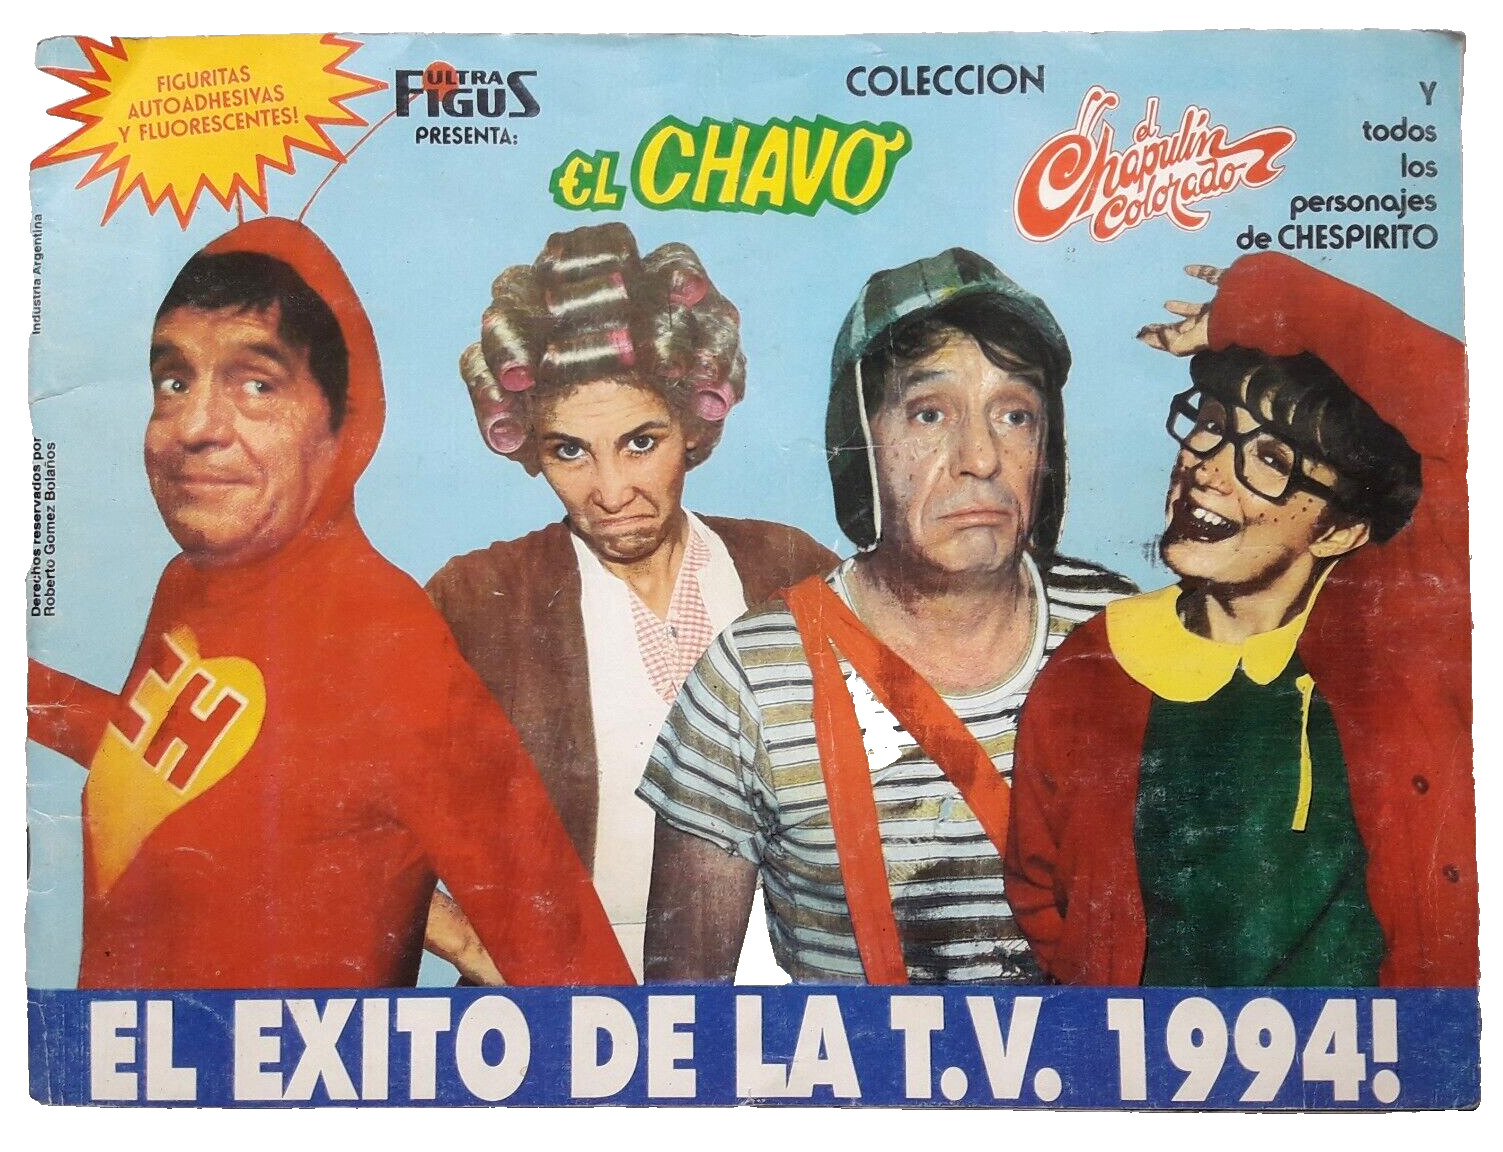 Vtg 1994 Chavo del 8-Chapulin Colorado Ultra Figus Argentina Sticker Album Read